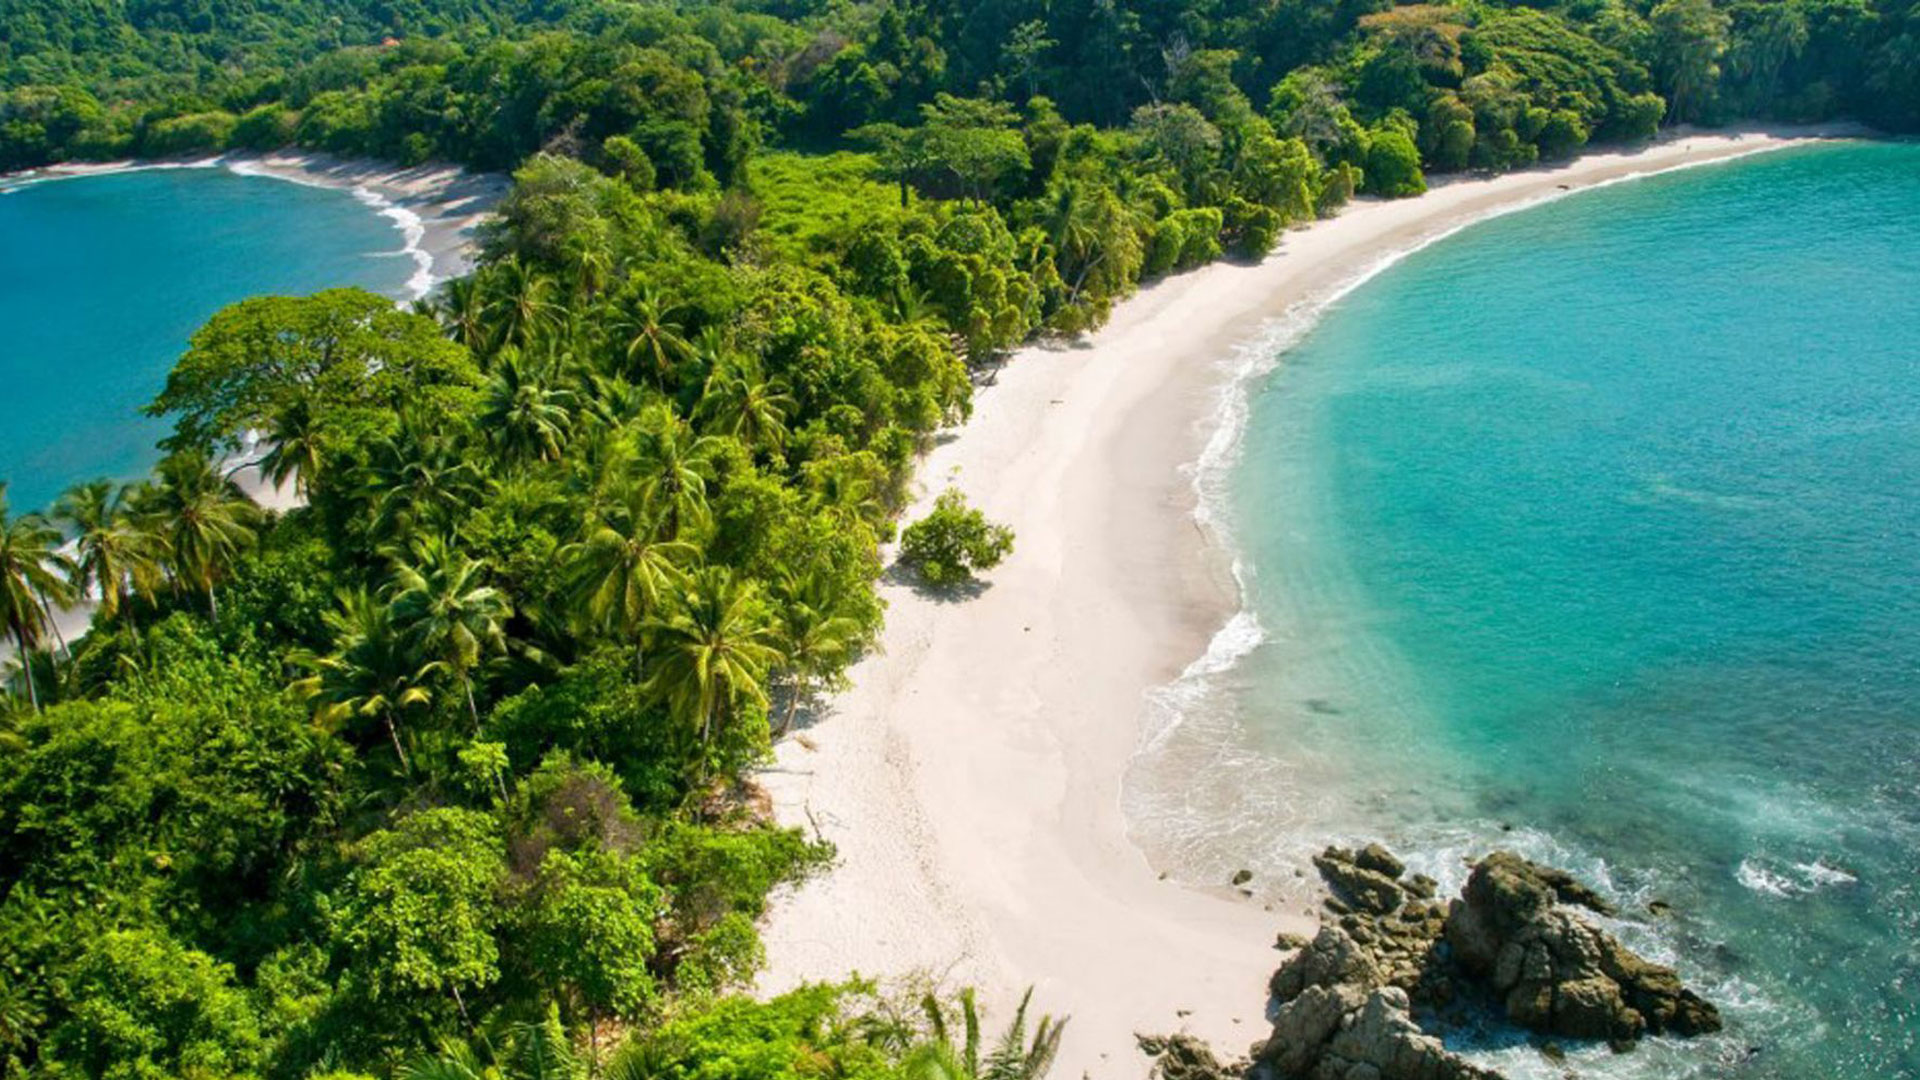 COSTA RICA A TROPICAL PARADISE